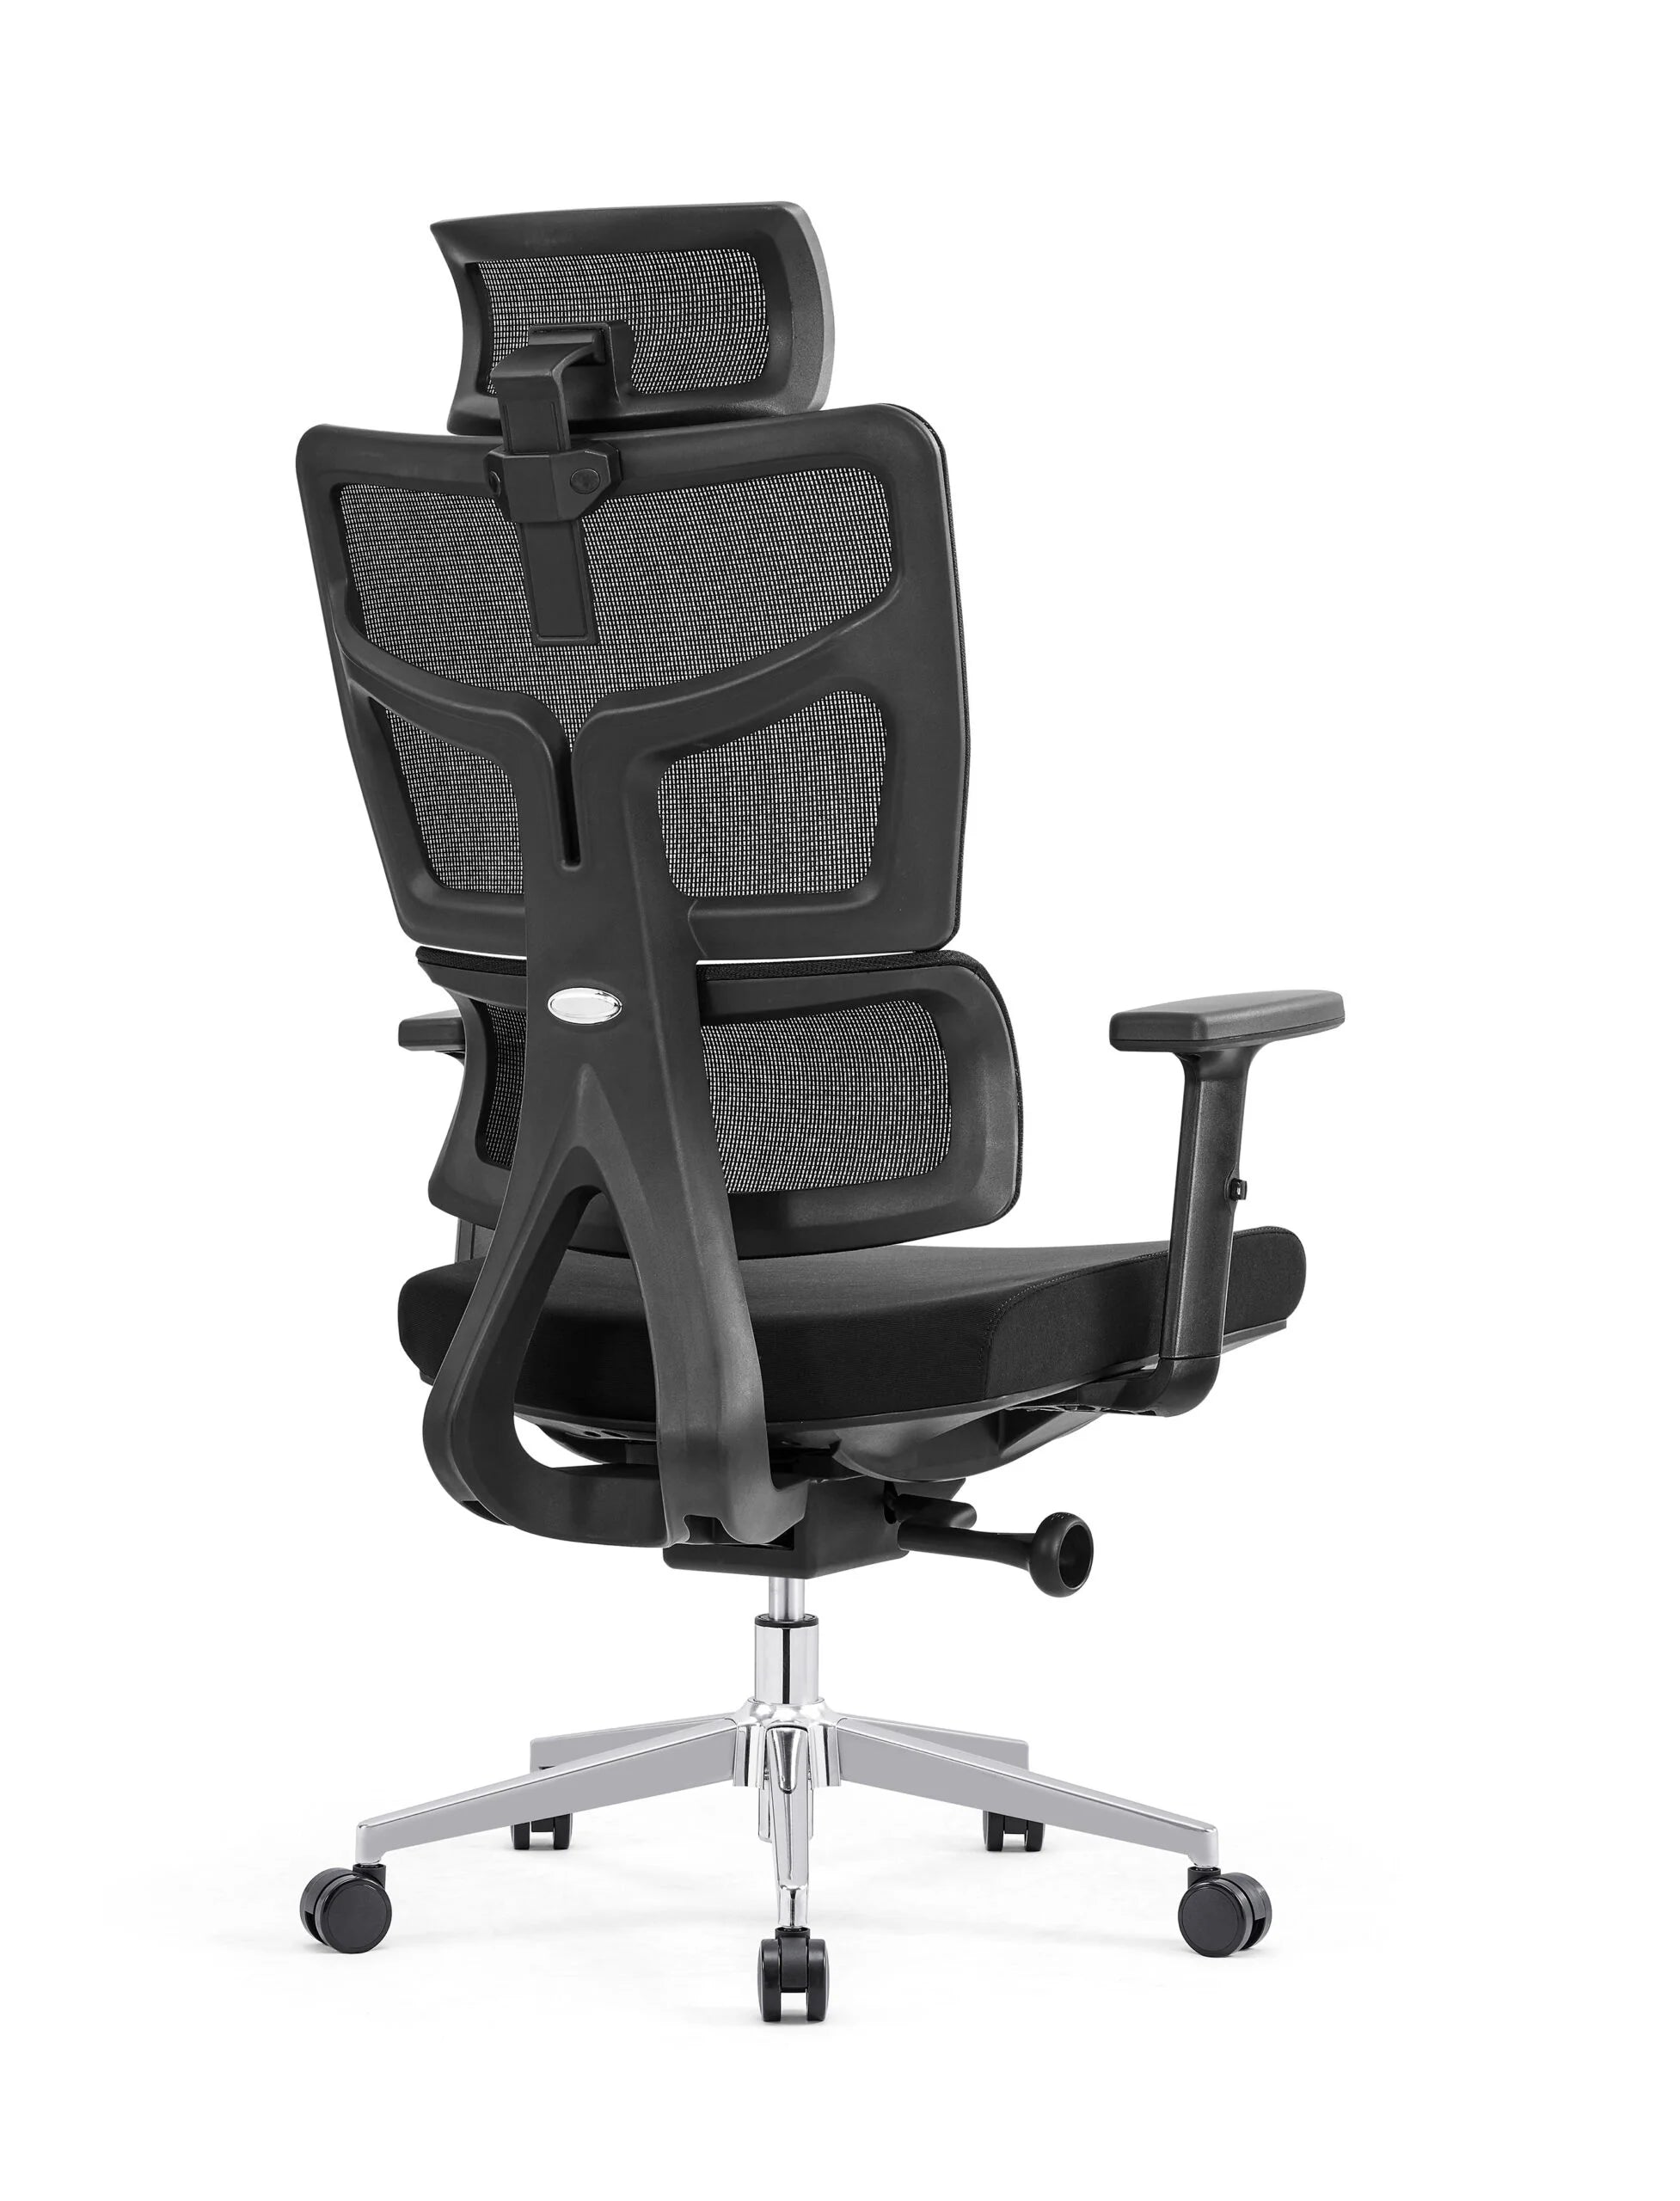 Space Mesh Executive Ergonomic Desk Chair With Headrest @HOG furniture.